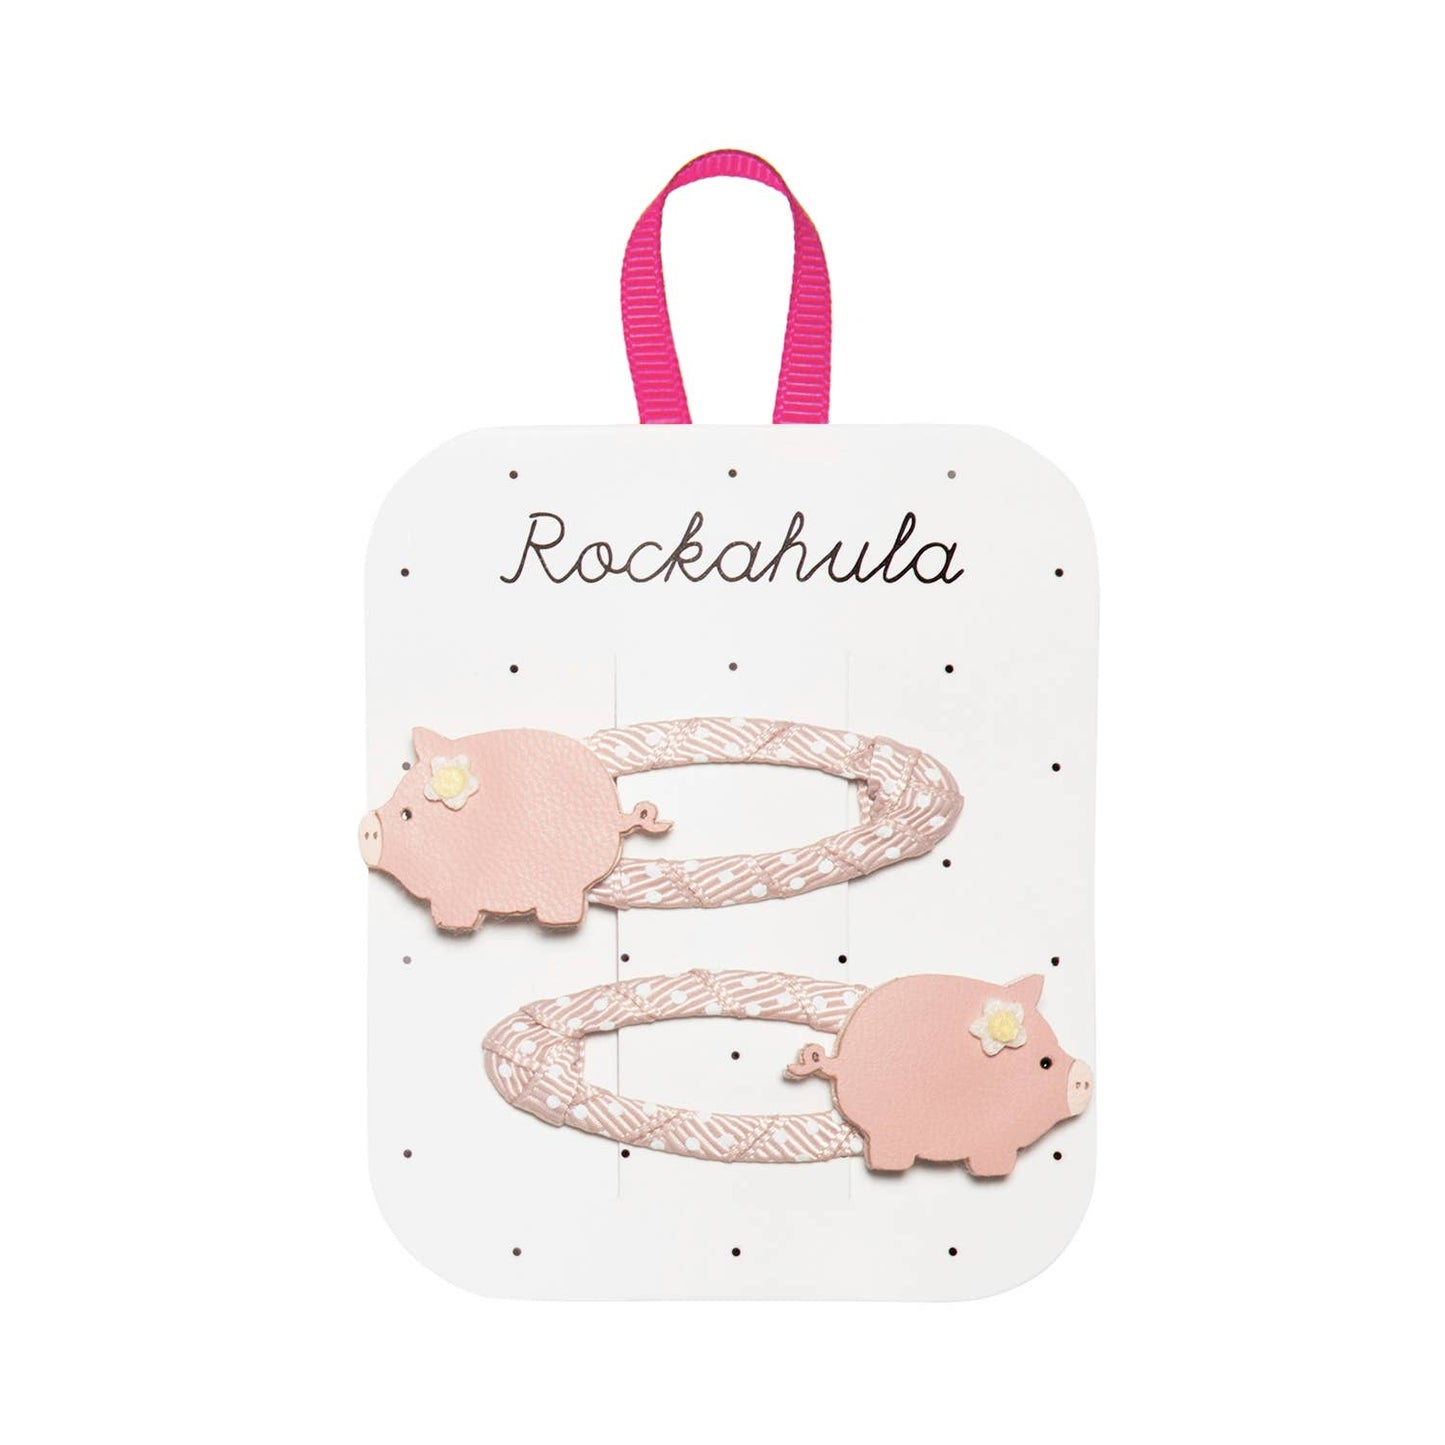 Rockahula Kids - Polly Pig Clips